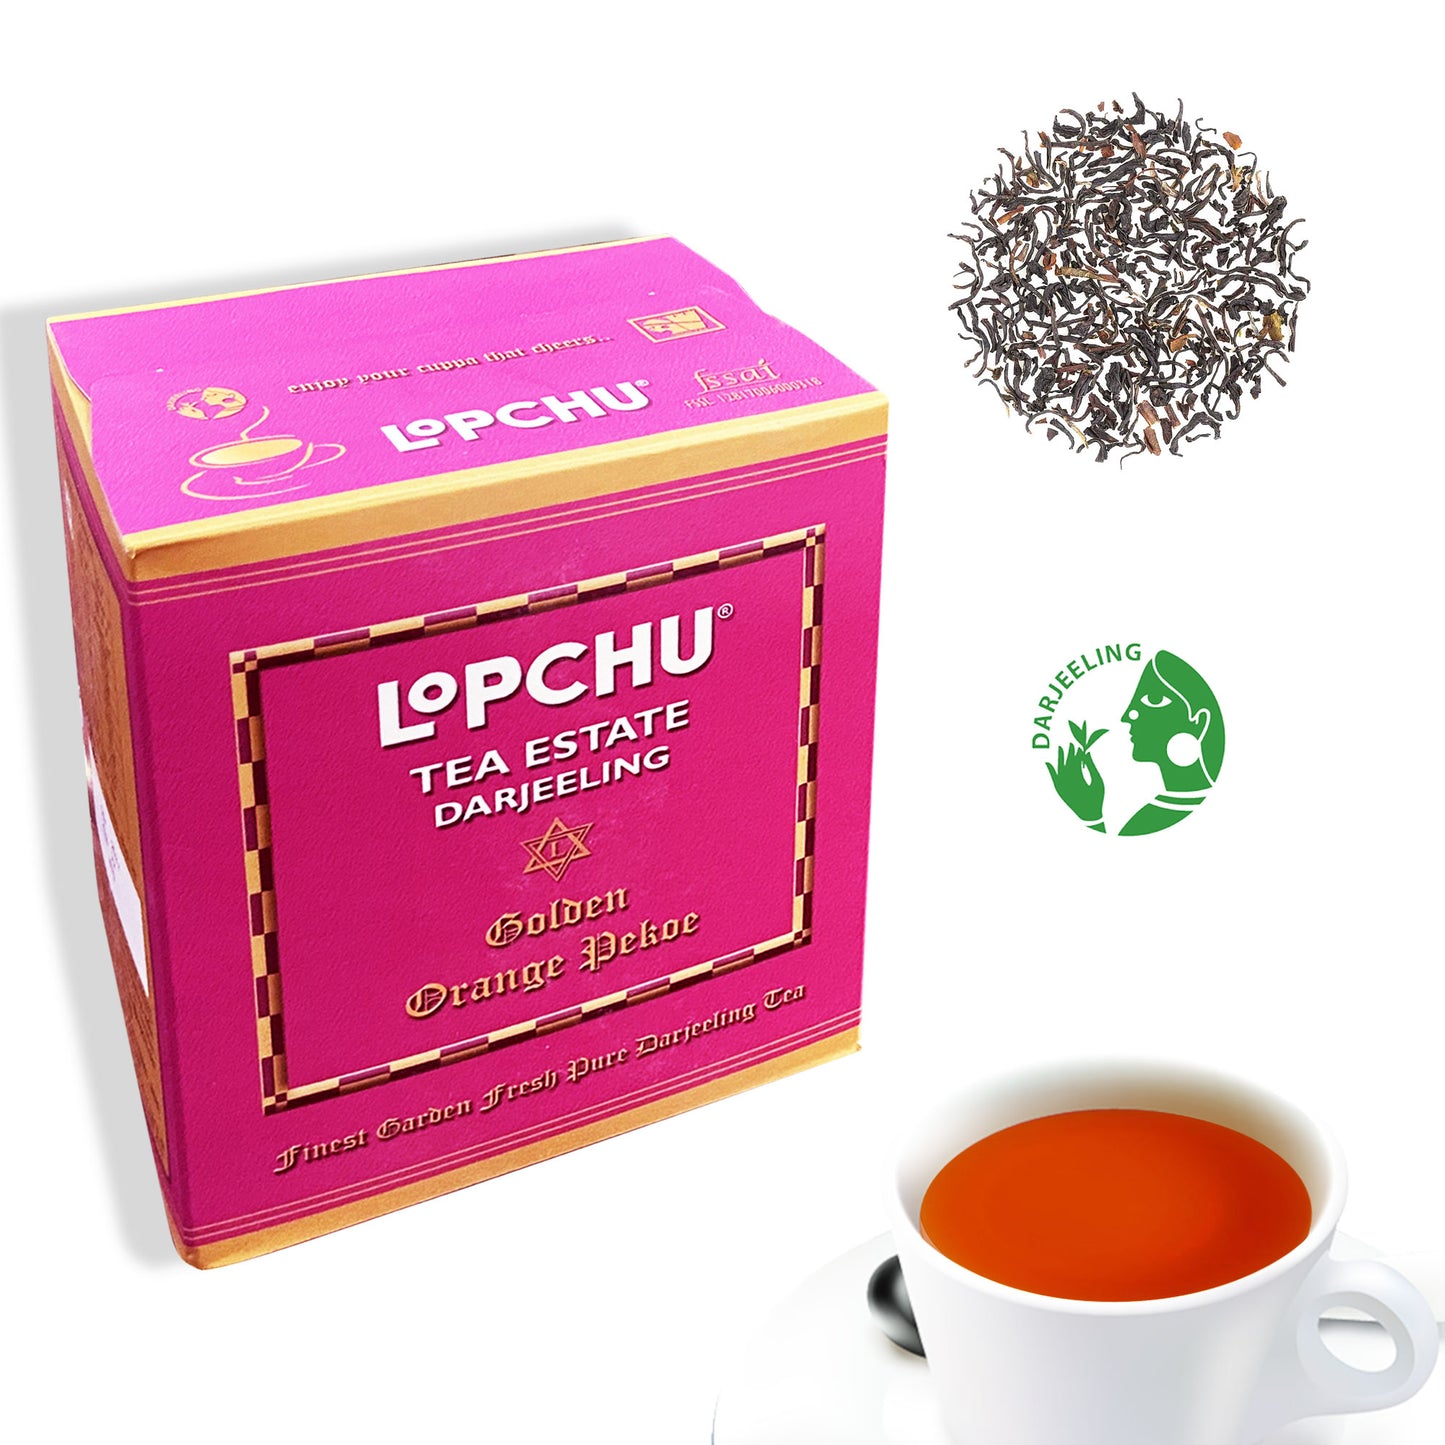 LoPCHU Flowery Golden Orange Pekoe Darjeeling Tea